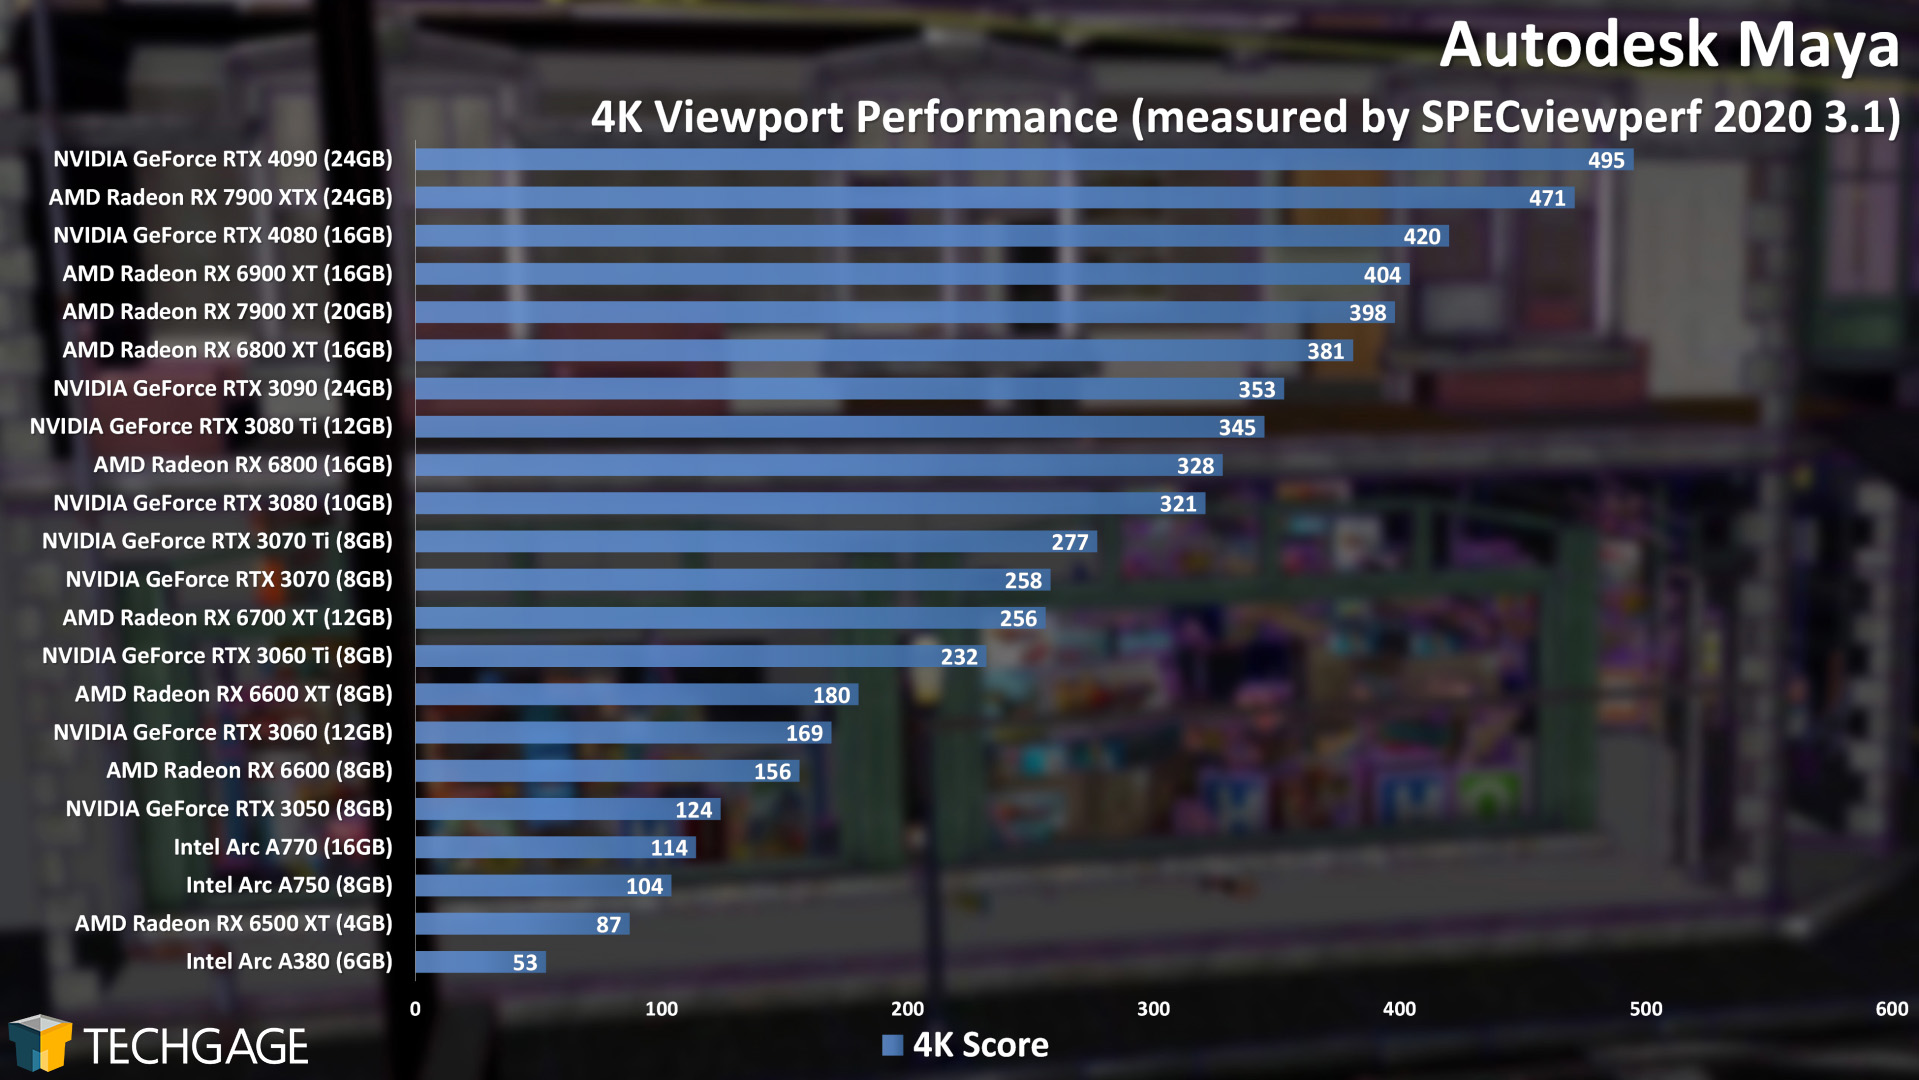 Autodesk Maya 4K Viewport Performance (AMD Radeon RX 7900 XT and XTX)